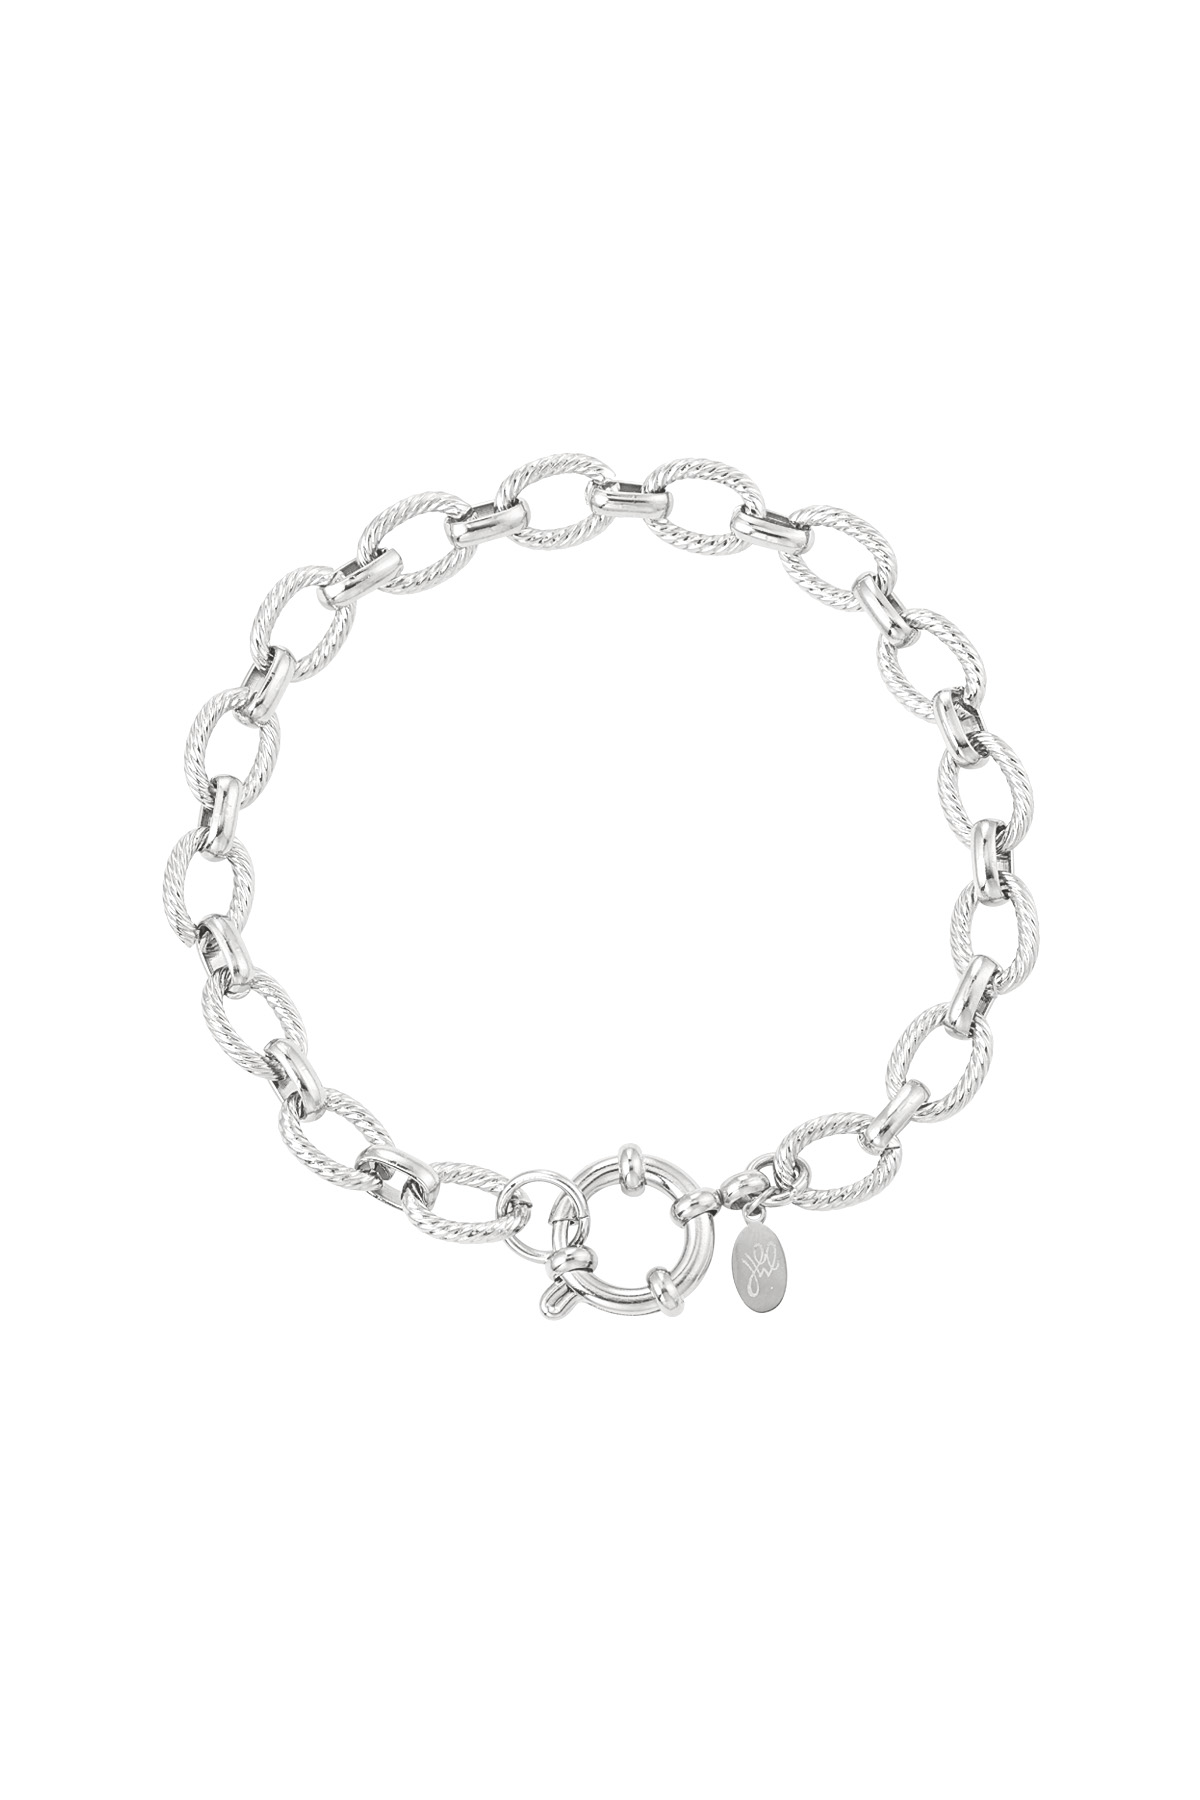 Bracelet round links - silver 